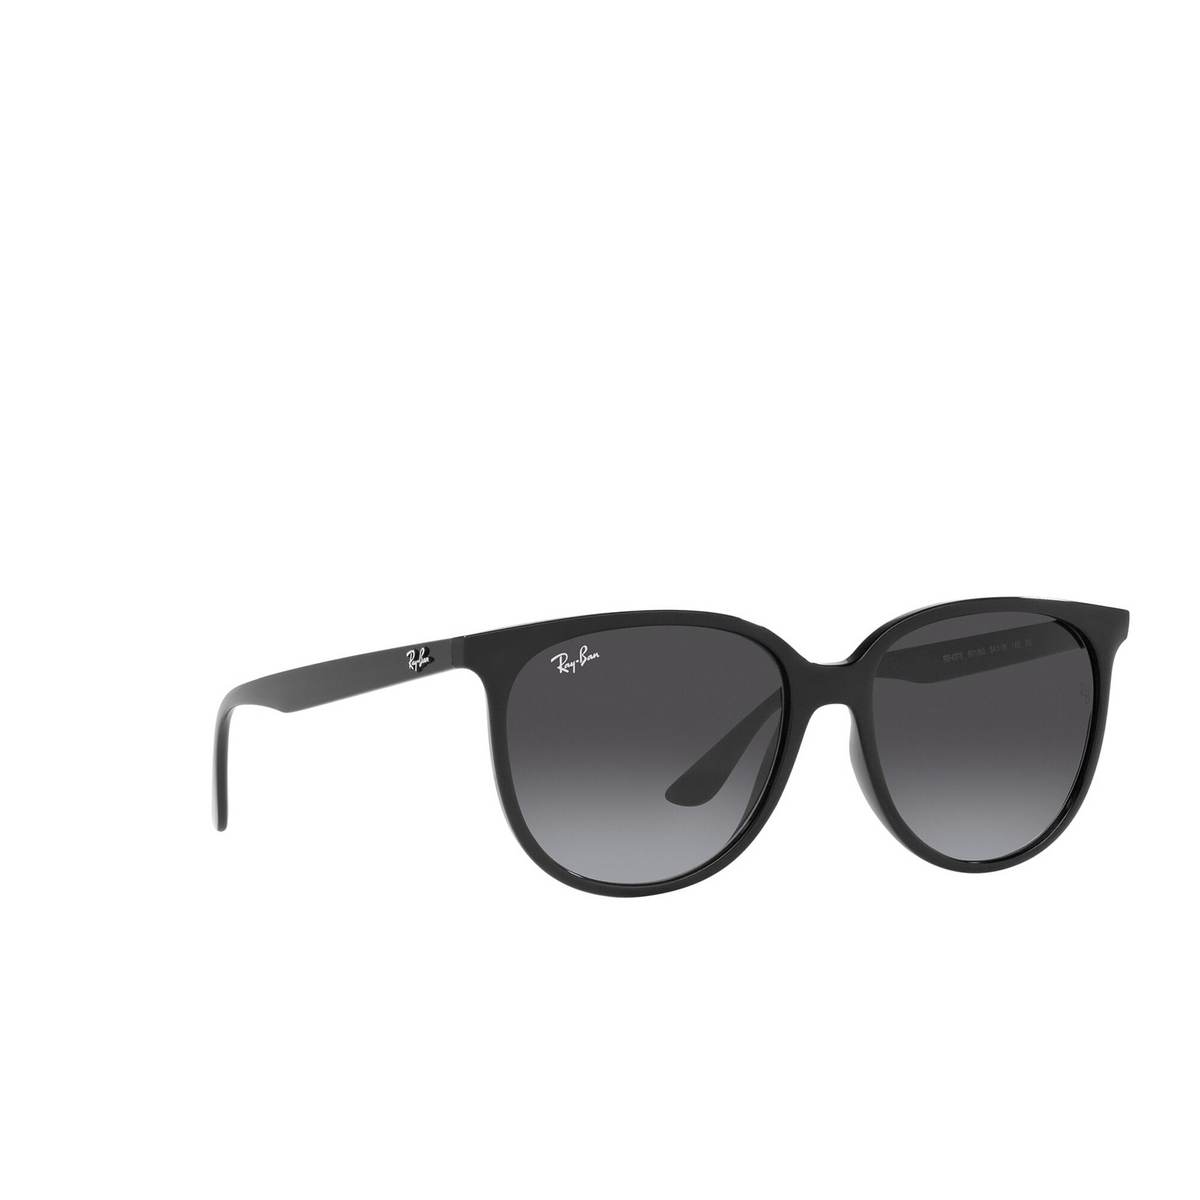 Ray-Ban® Square Sunglasses: RB4378 color Black 601/8G - three-quarters view.